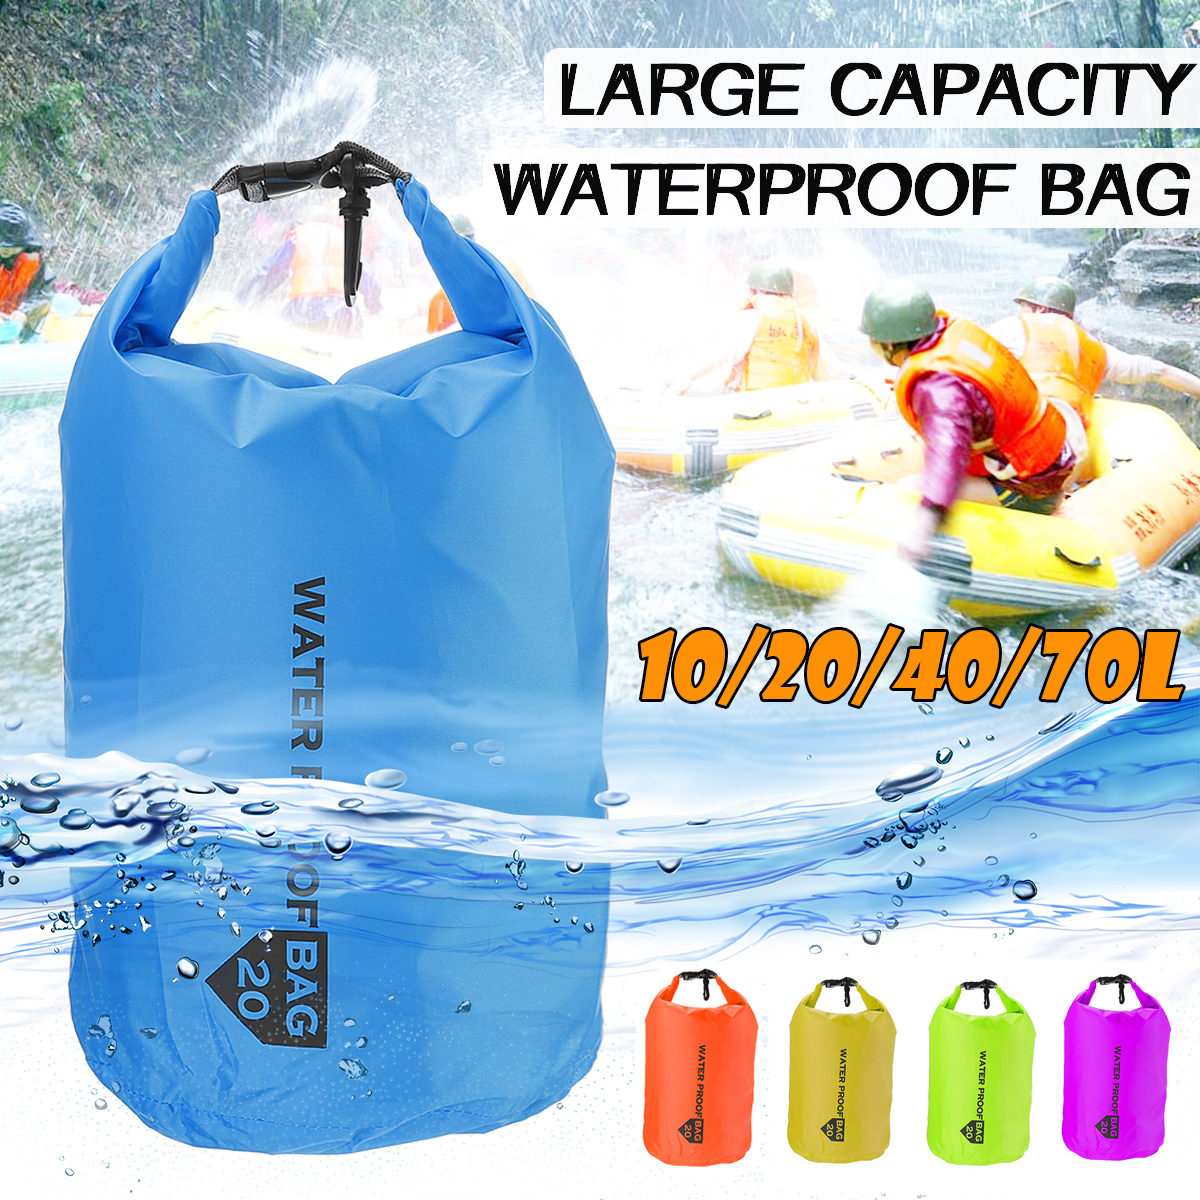 10L-20L-40L-70L-Waterproof-Bag-Dry-Sack-Storage-Pack-For-Kayak-Canoeing-Camping-Travel-1531416-1